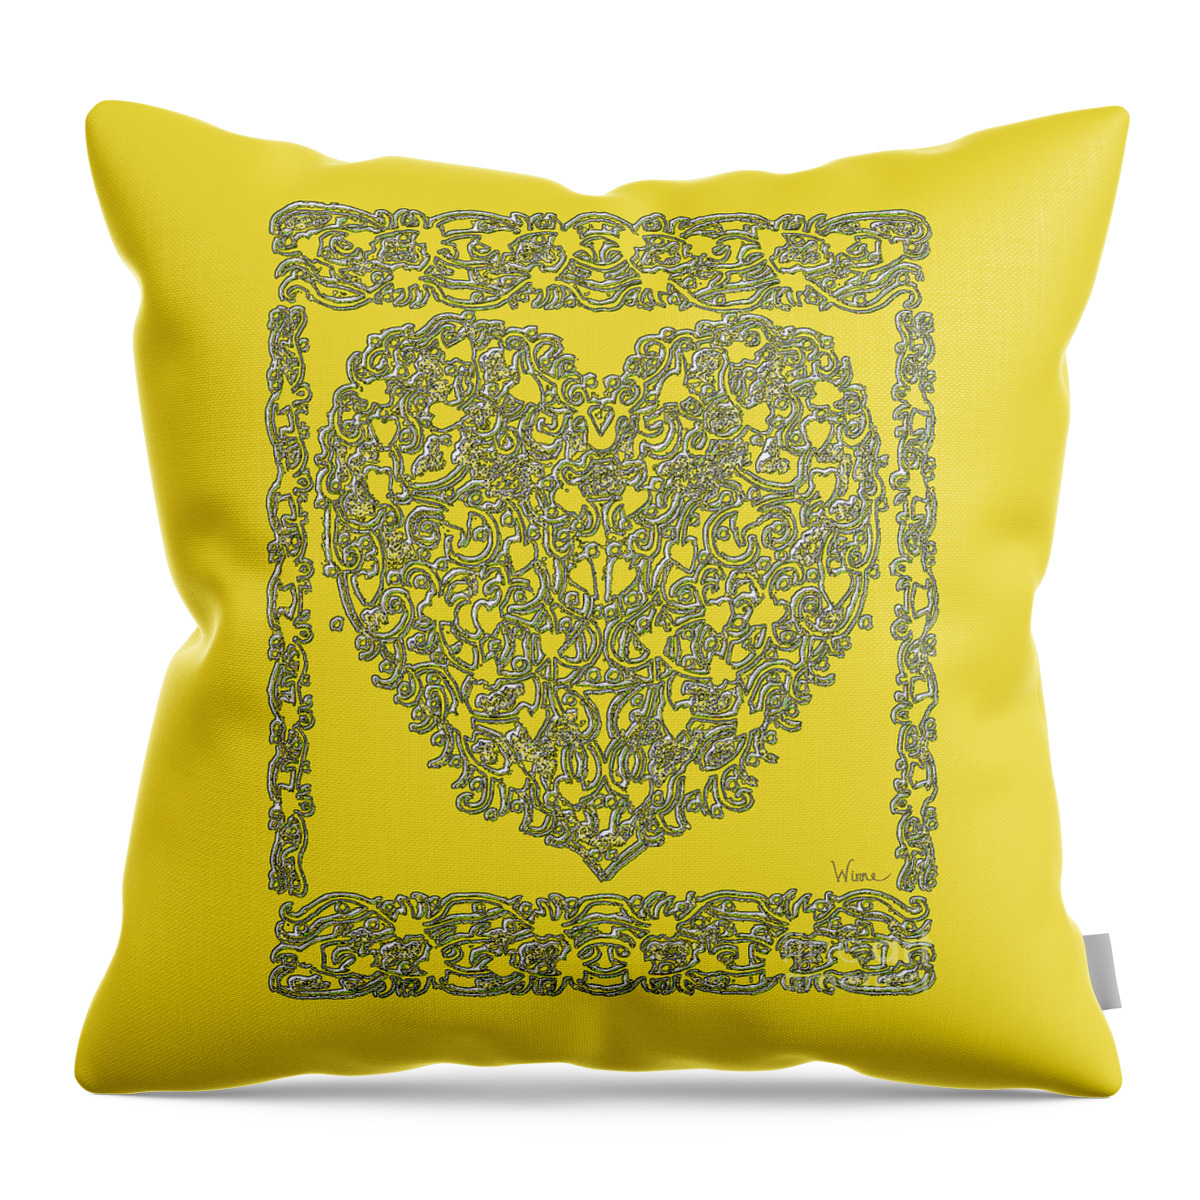 Lise Winne Throw Pillow featuring the digital art Embossed Gold Heart by Lise Winne